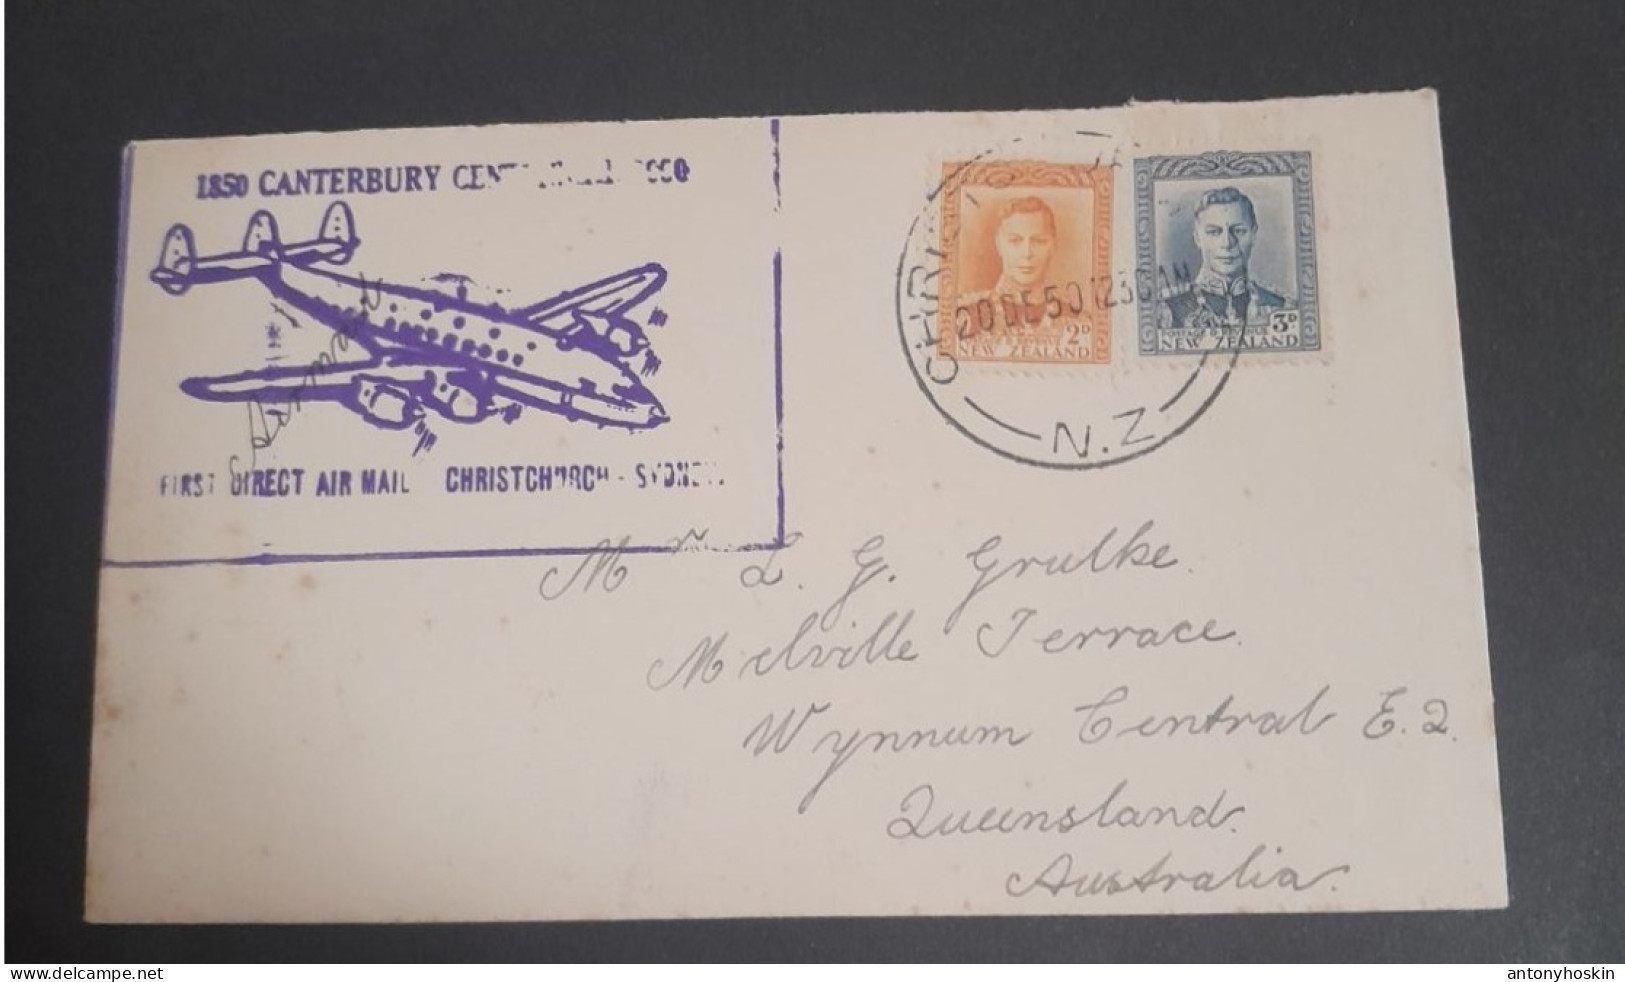 20 Dec 1950 First Direct Air Mail Christchurch -Sydney - Airmail